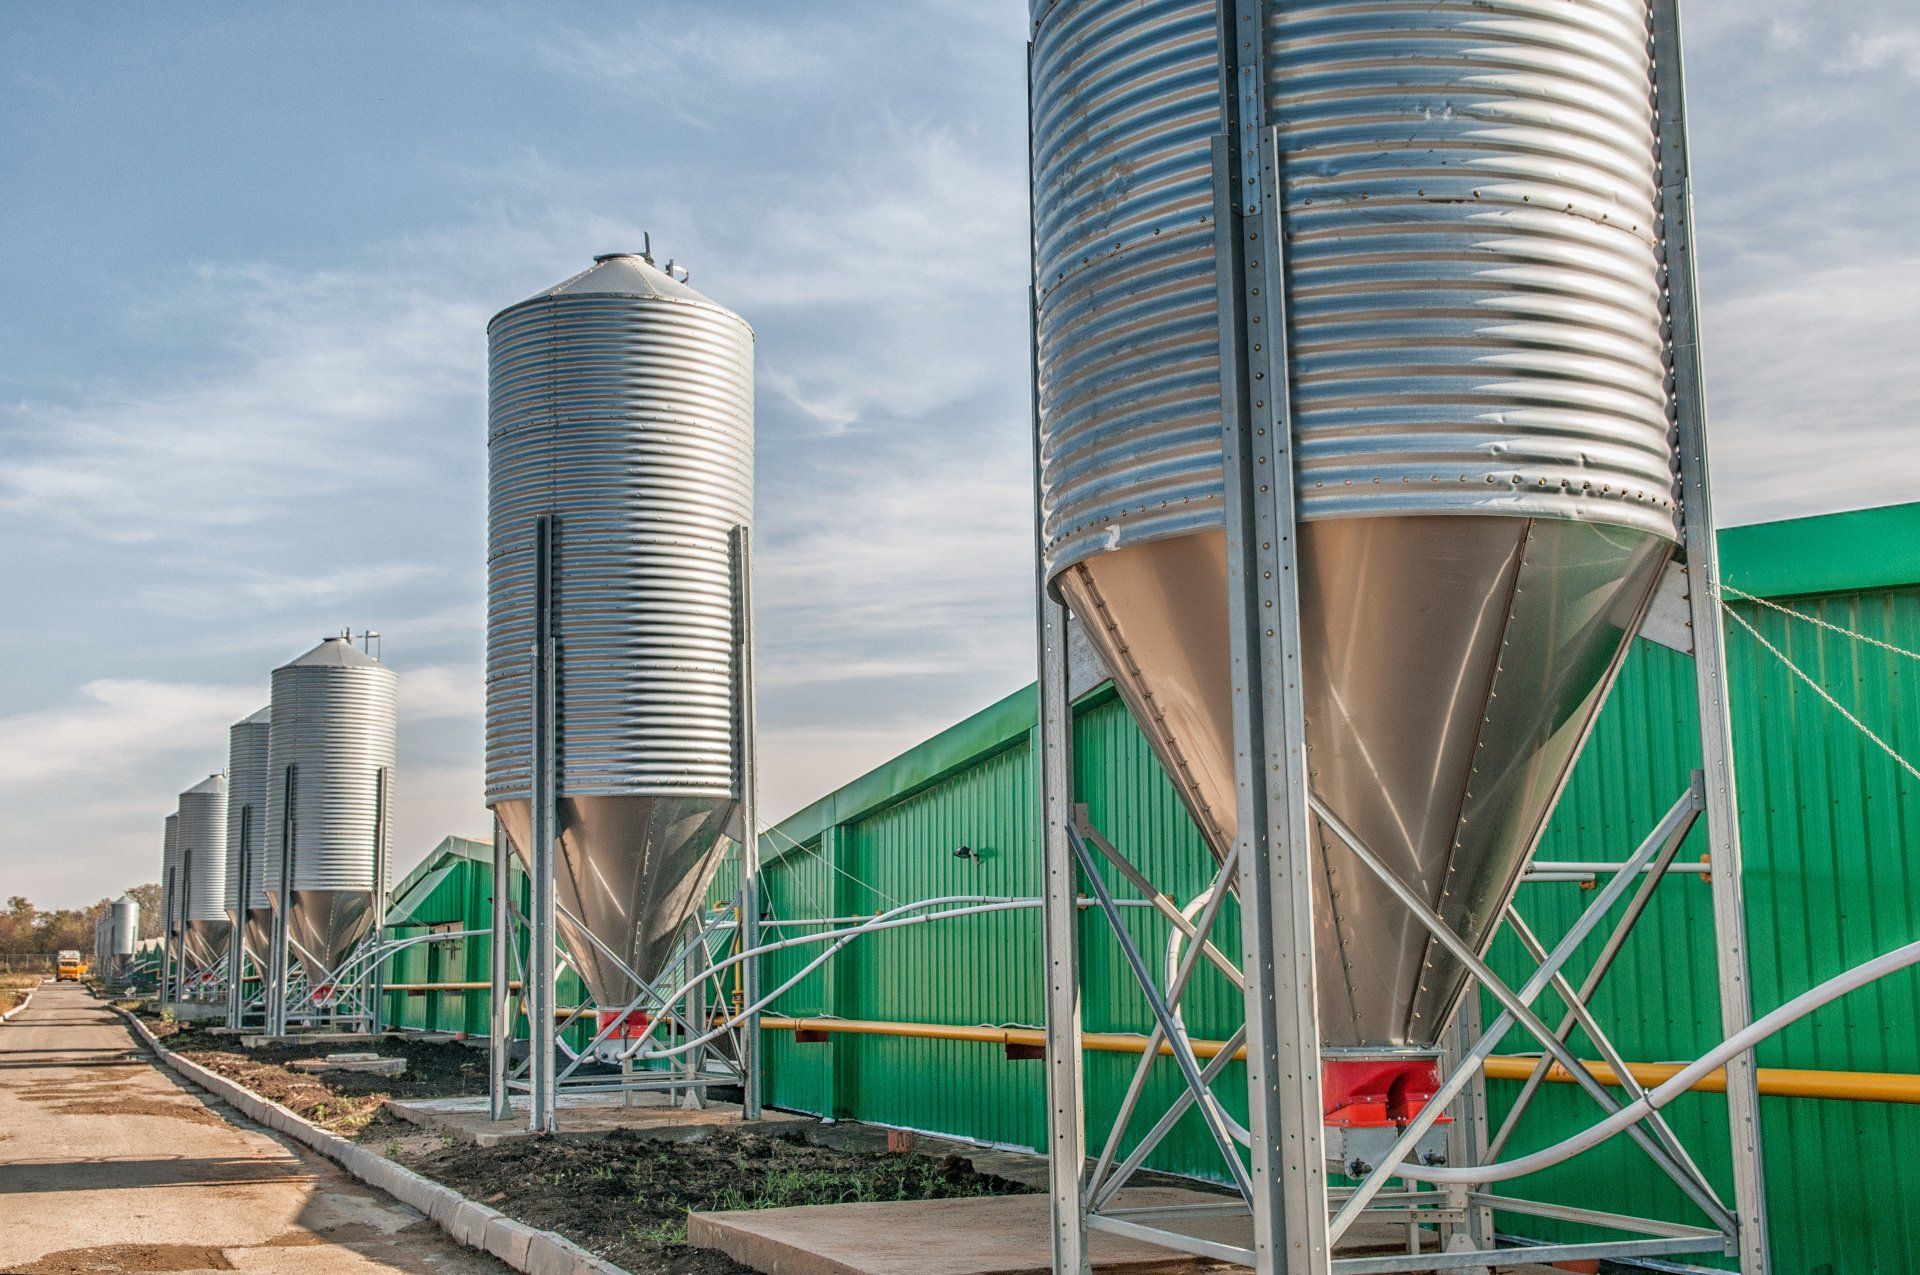 Custom farm & rural sheds - silo outside of storage shed